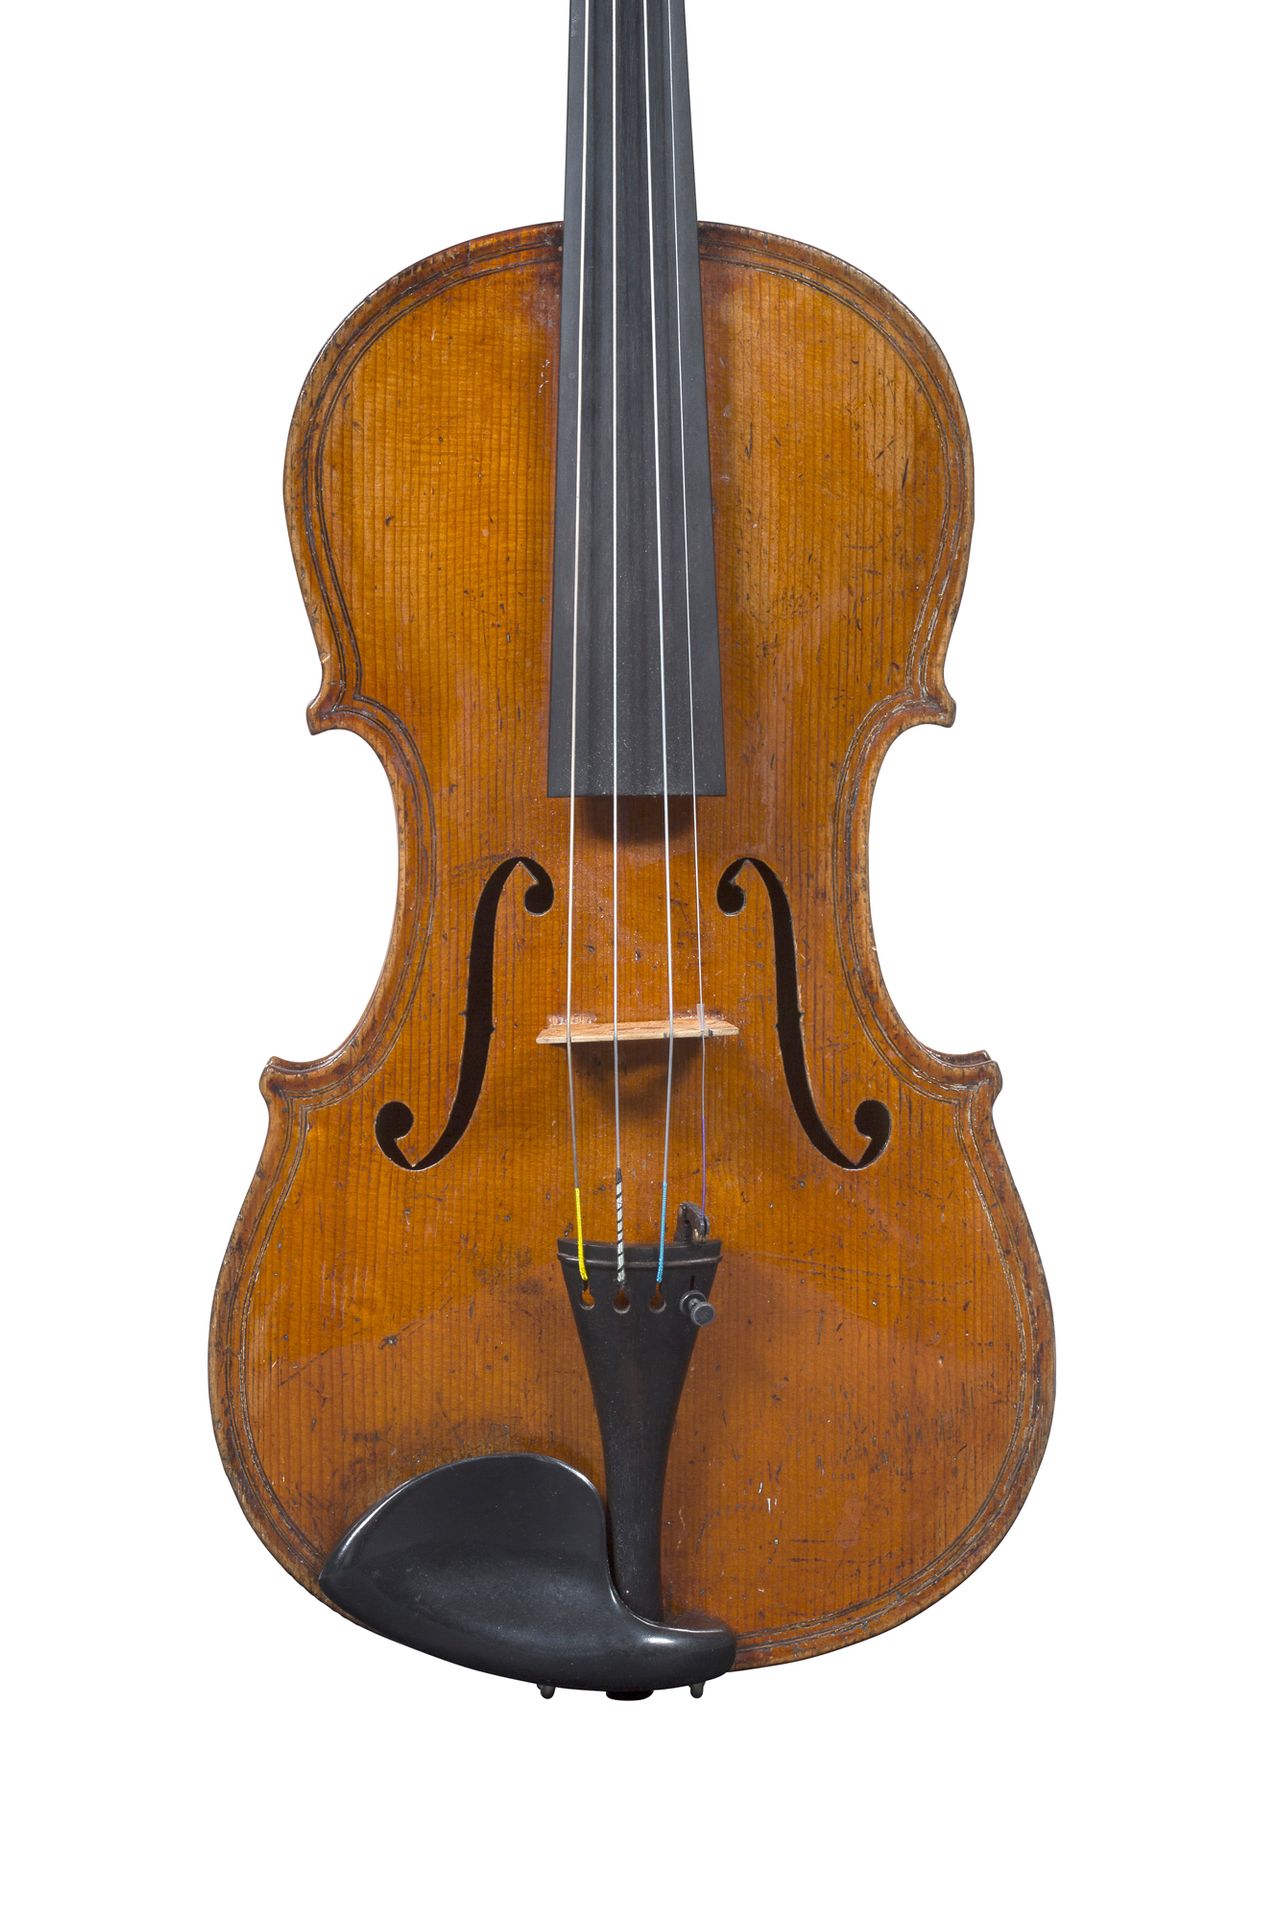 Null A Violin, 19th century